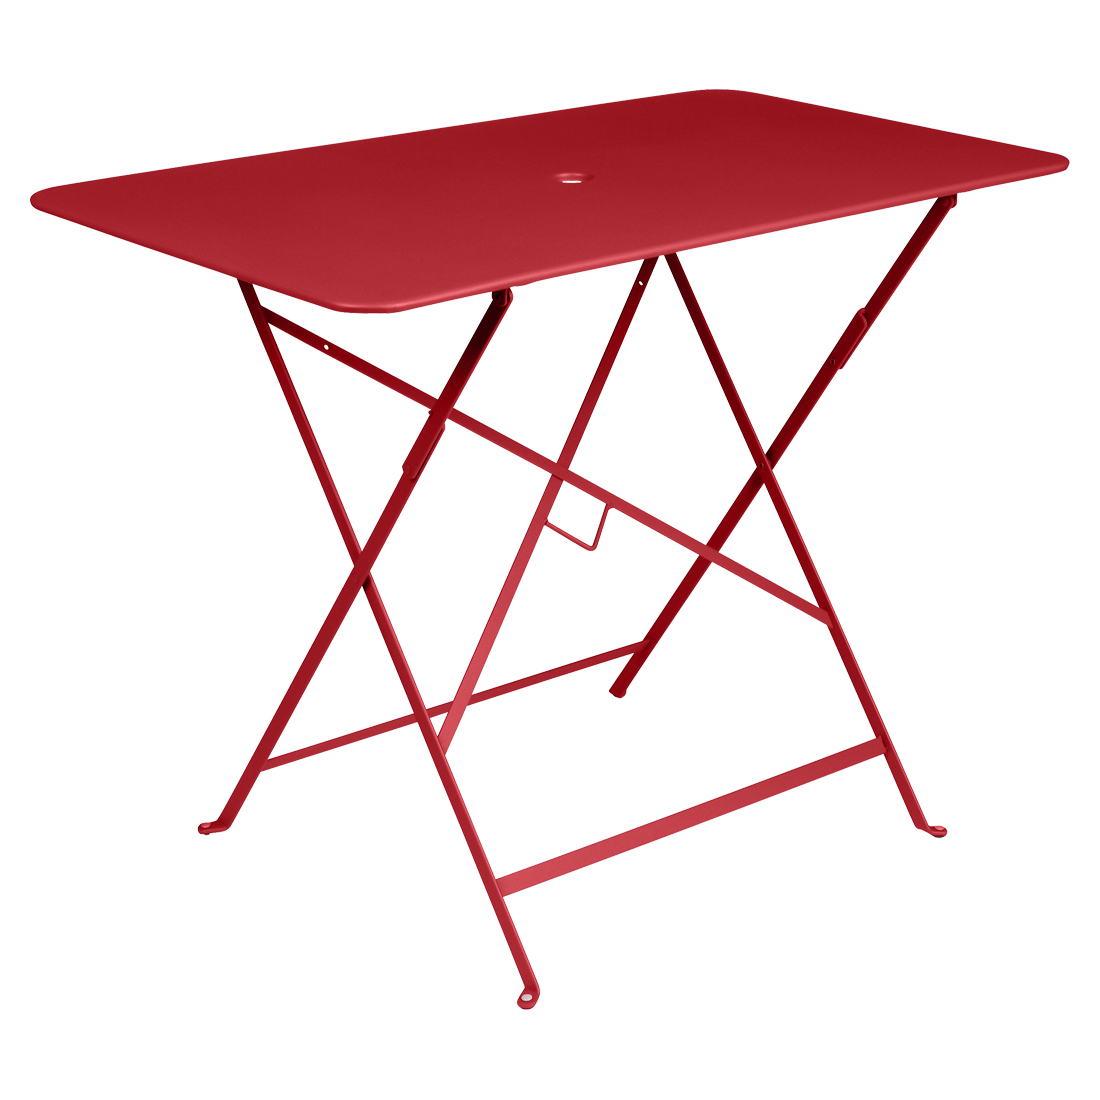 Makově červený kovový skládací stůl Fermob Bistro